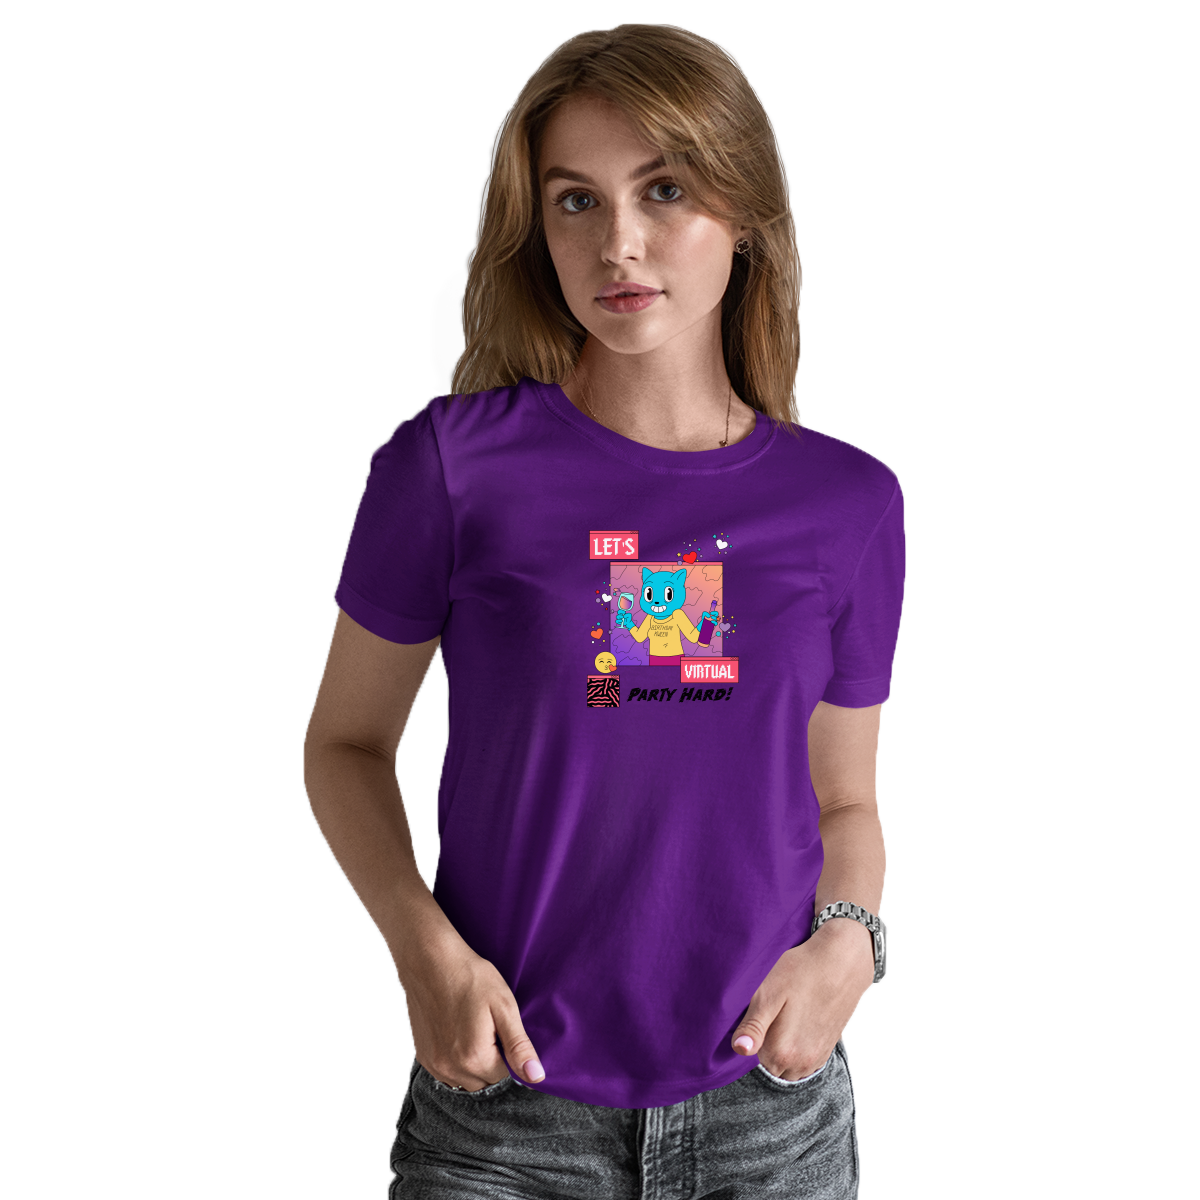 Let's Virtual Party Hard Women's T-shirt | Purple